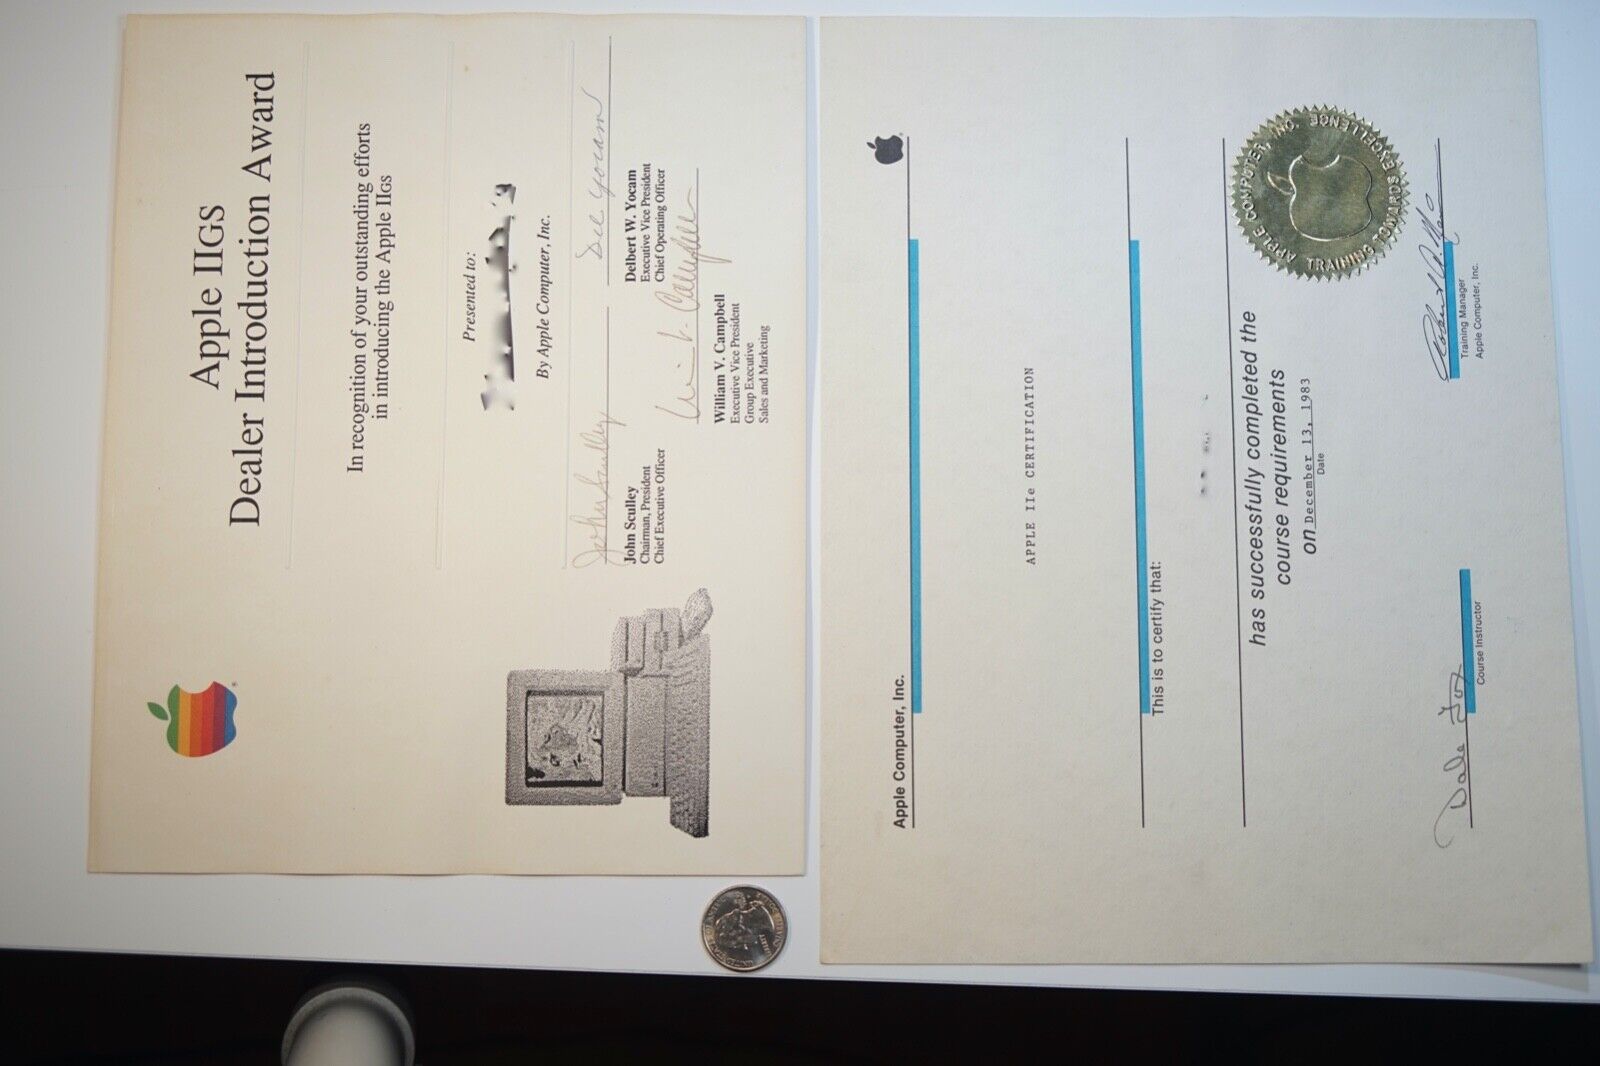 2 Rare Original Vintage Apple Computer Dealer Awards Certificates, w/ Signatures